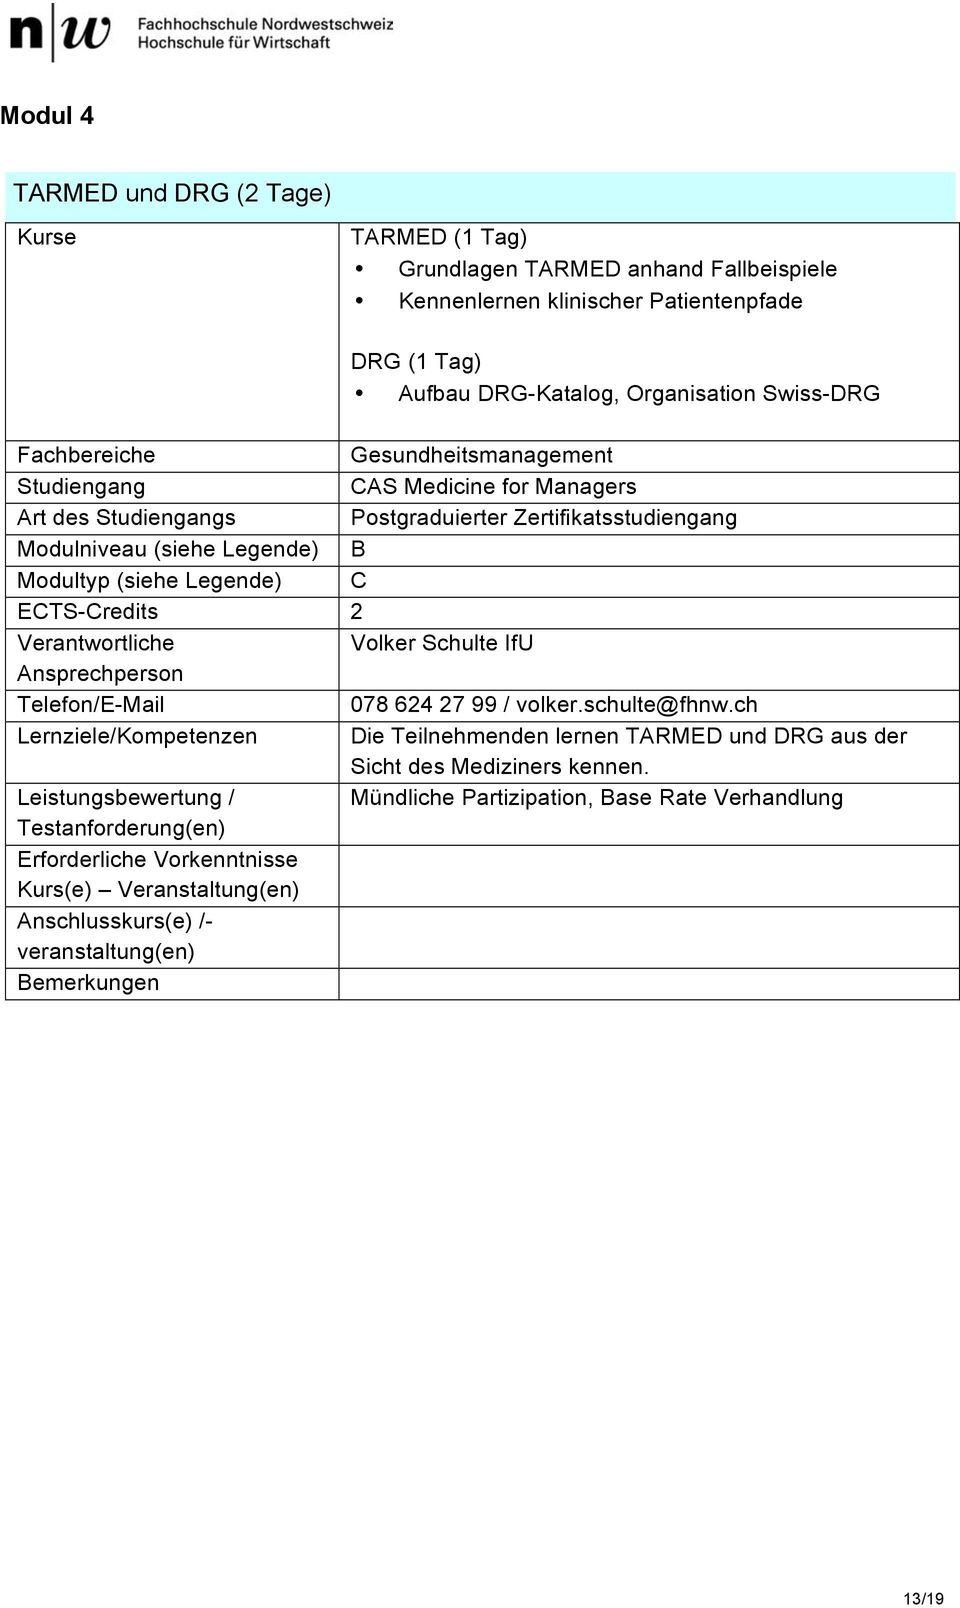 ECTS-Credits 2 Verantwortliche Volker Schulte IfU Ansprechperson Telefon/E-Mail 078 624 27 99 / volker.schulte@fhnw.